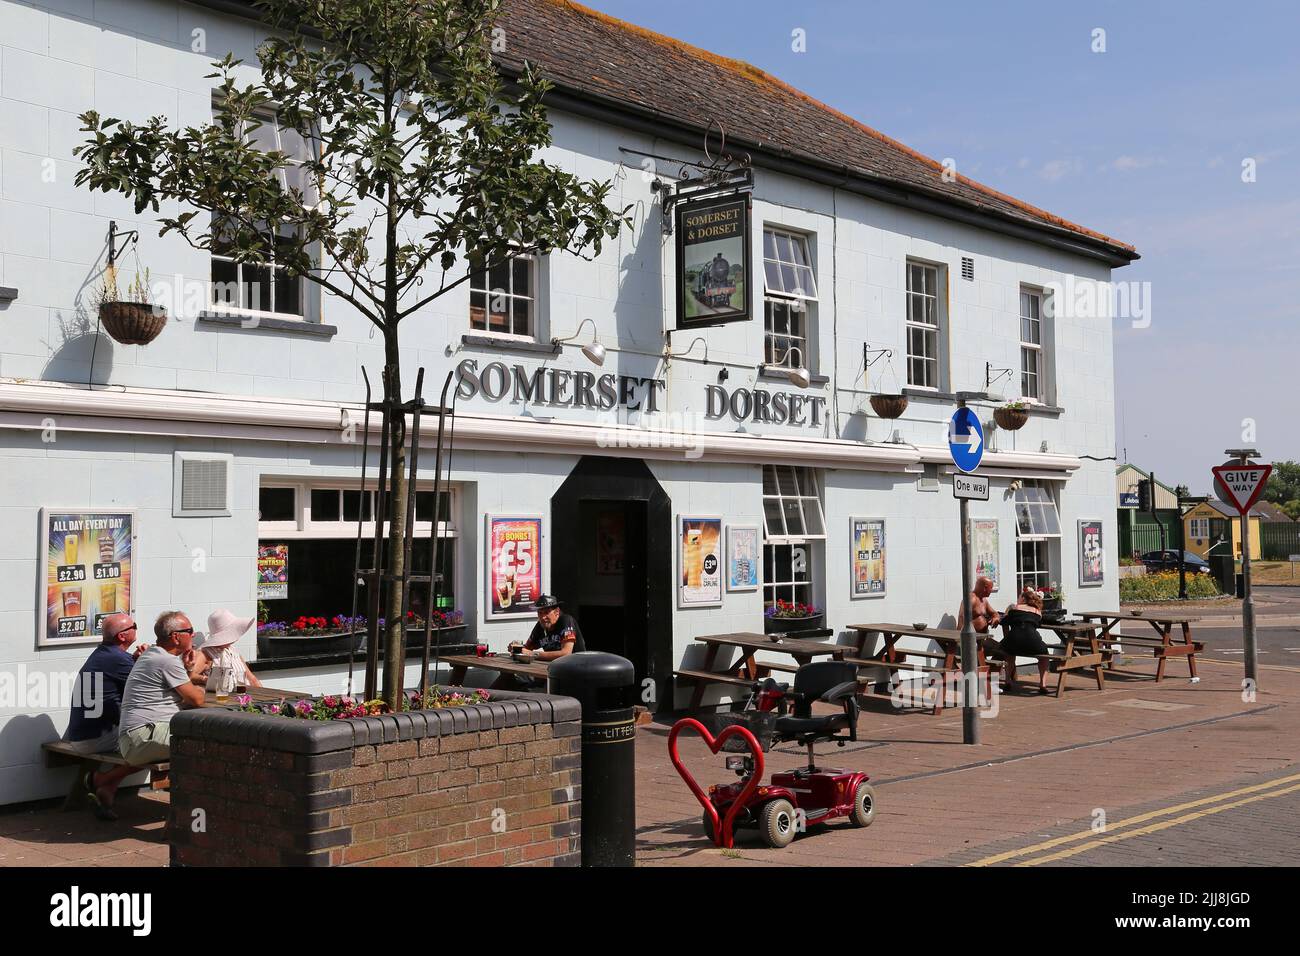 Somerset & Dorset pub, High Street, Burnham-on-Sea, Sedgemoor, Somerset, England, Great Britain, United Kingdom, UK, Europe Stock Photo